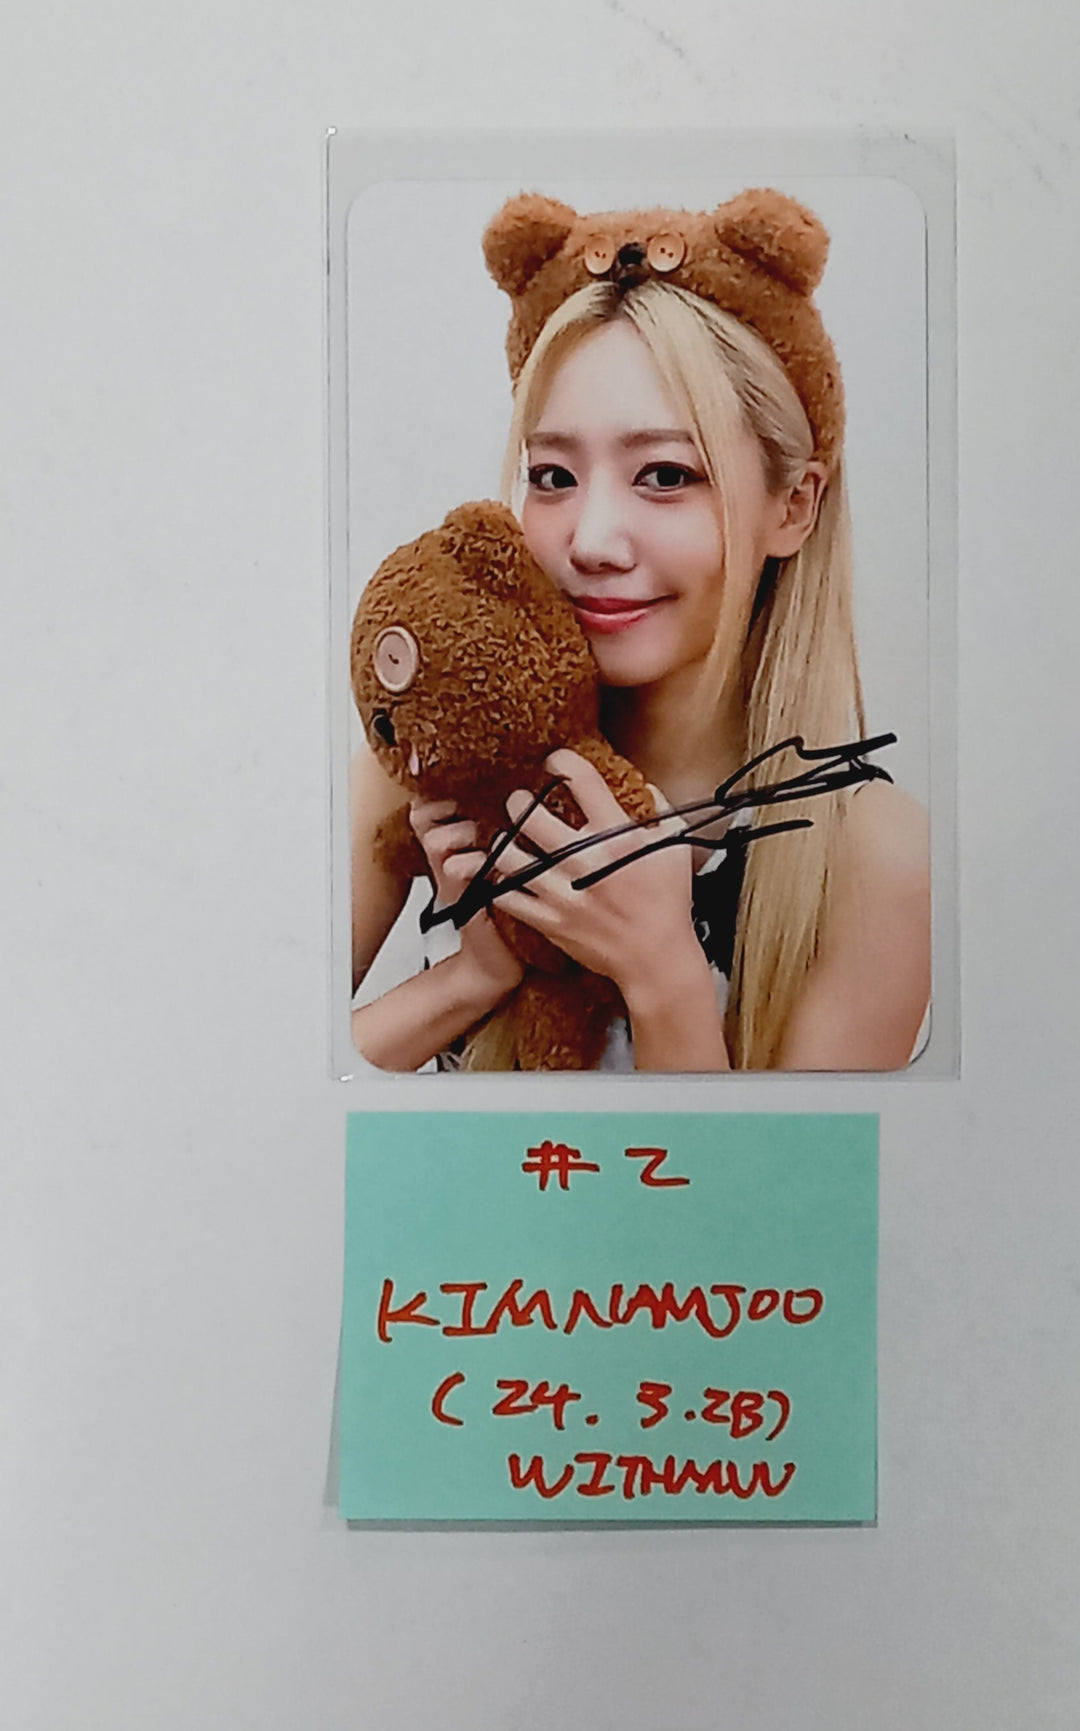 Kim Nam Joo " BAD" - Hand Autographed(Signed) Photocard [24.3.29]